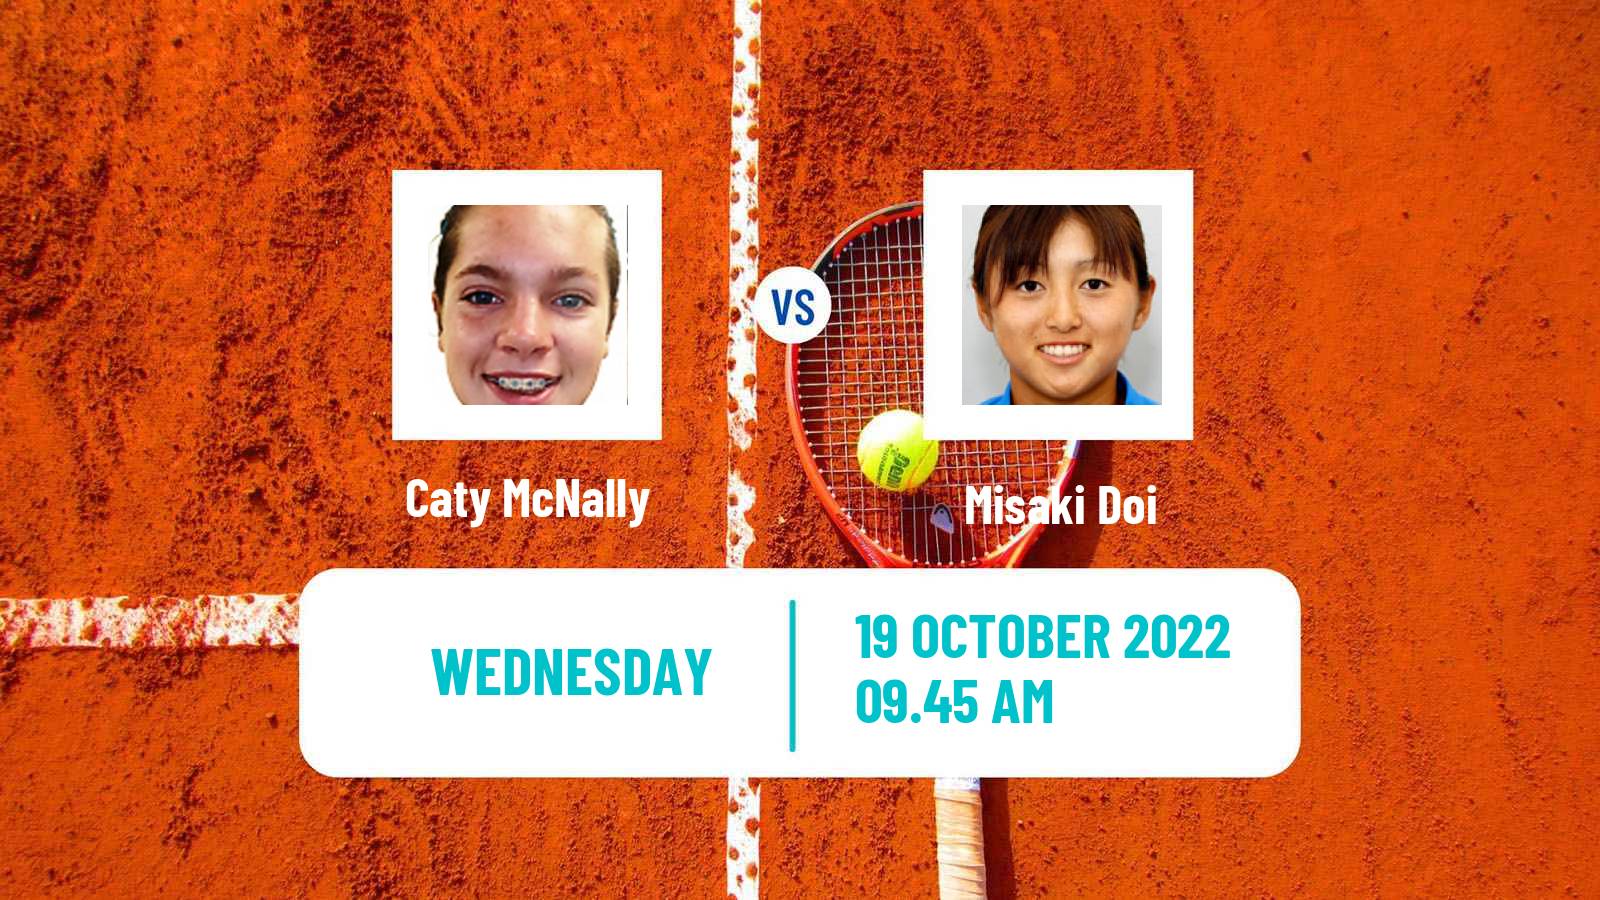 Tennis ATP Challenger Caty McNally - Misaki Doi